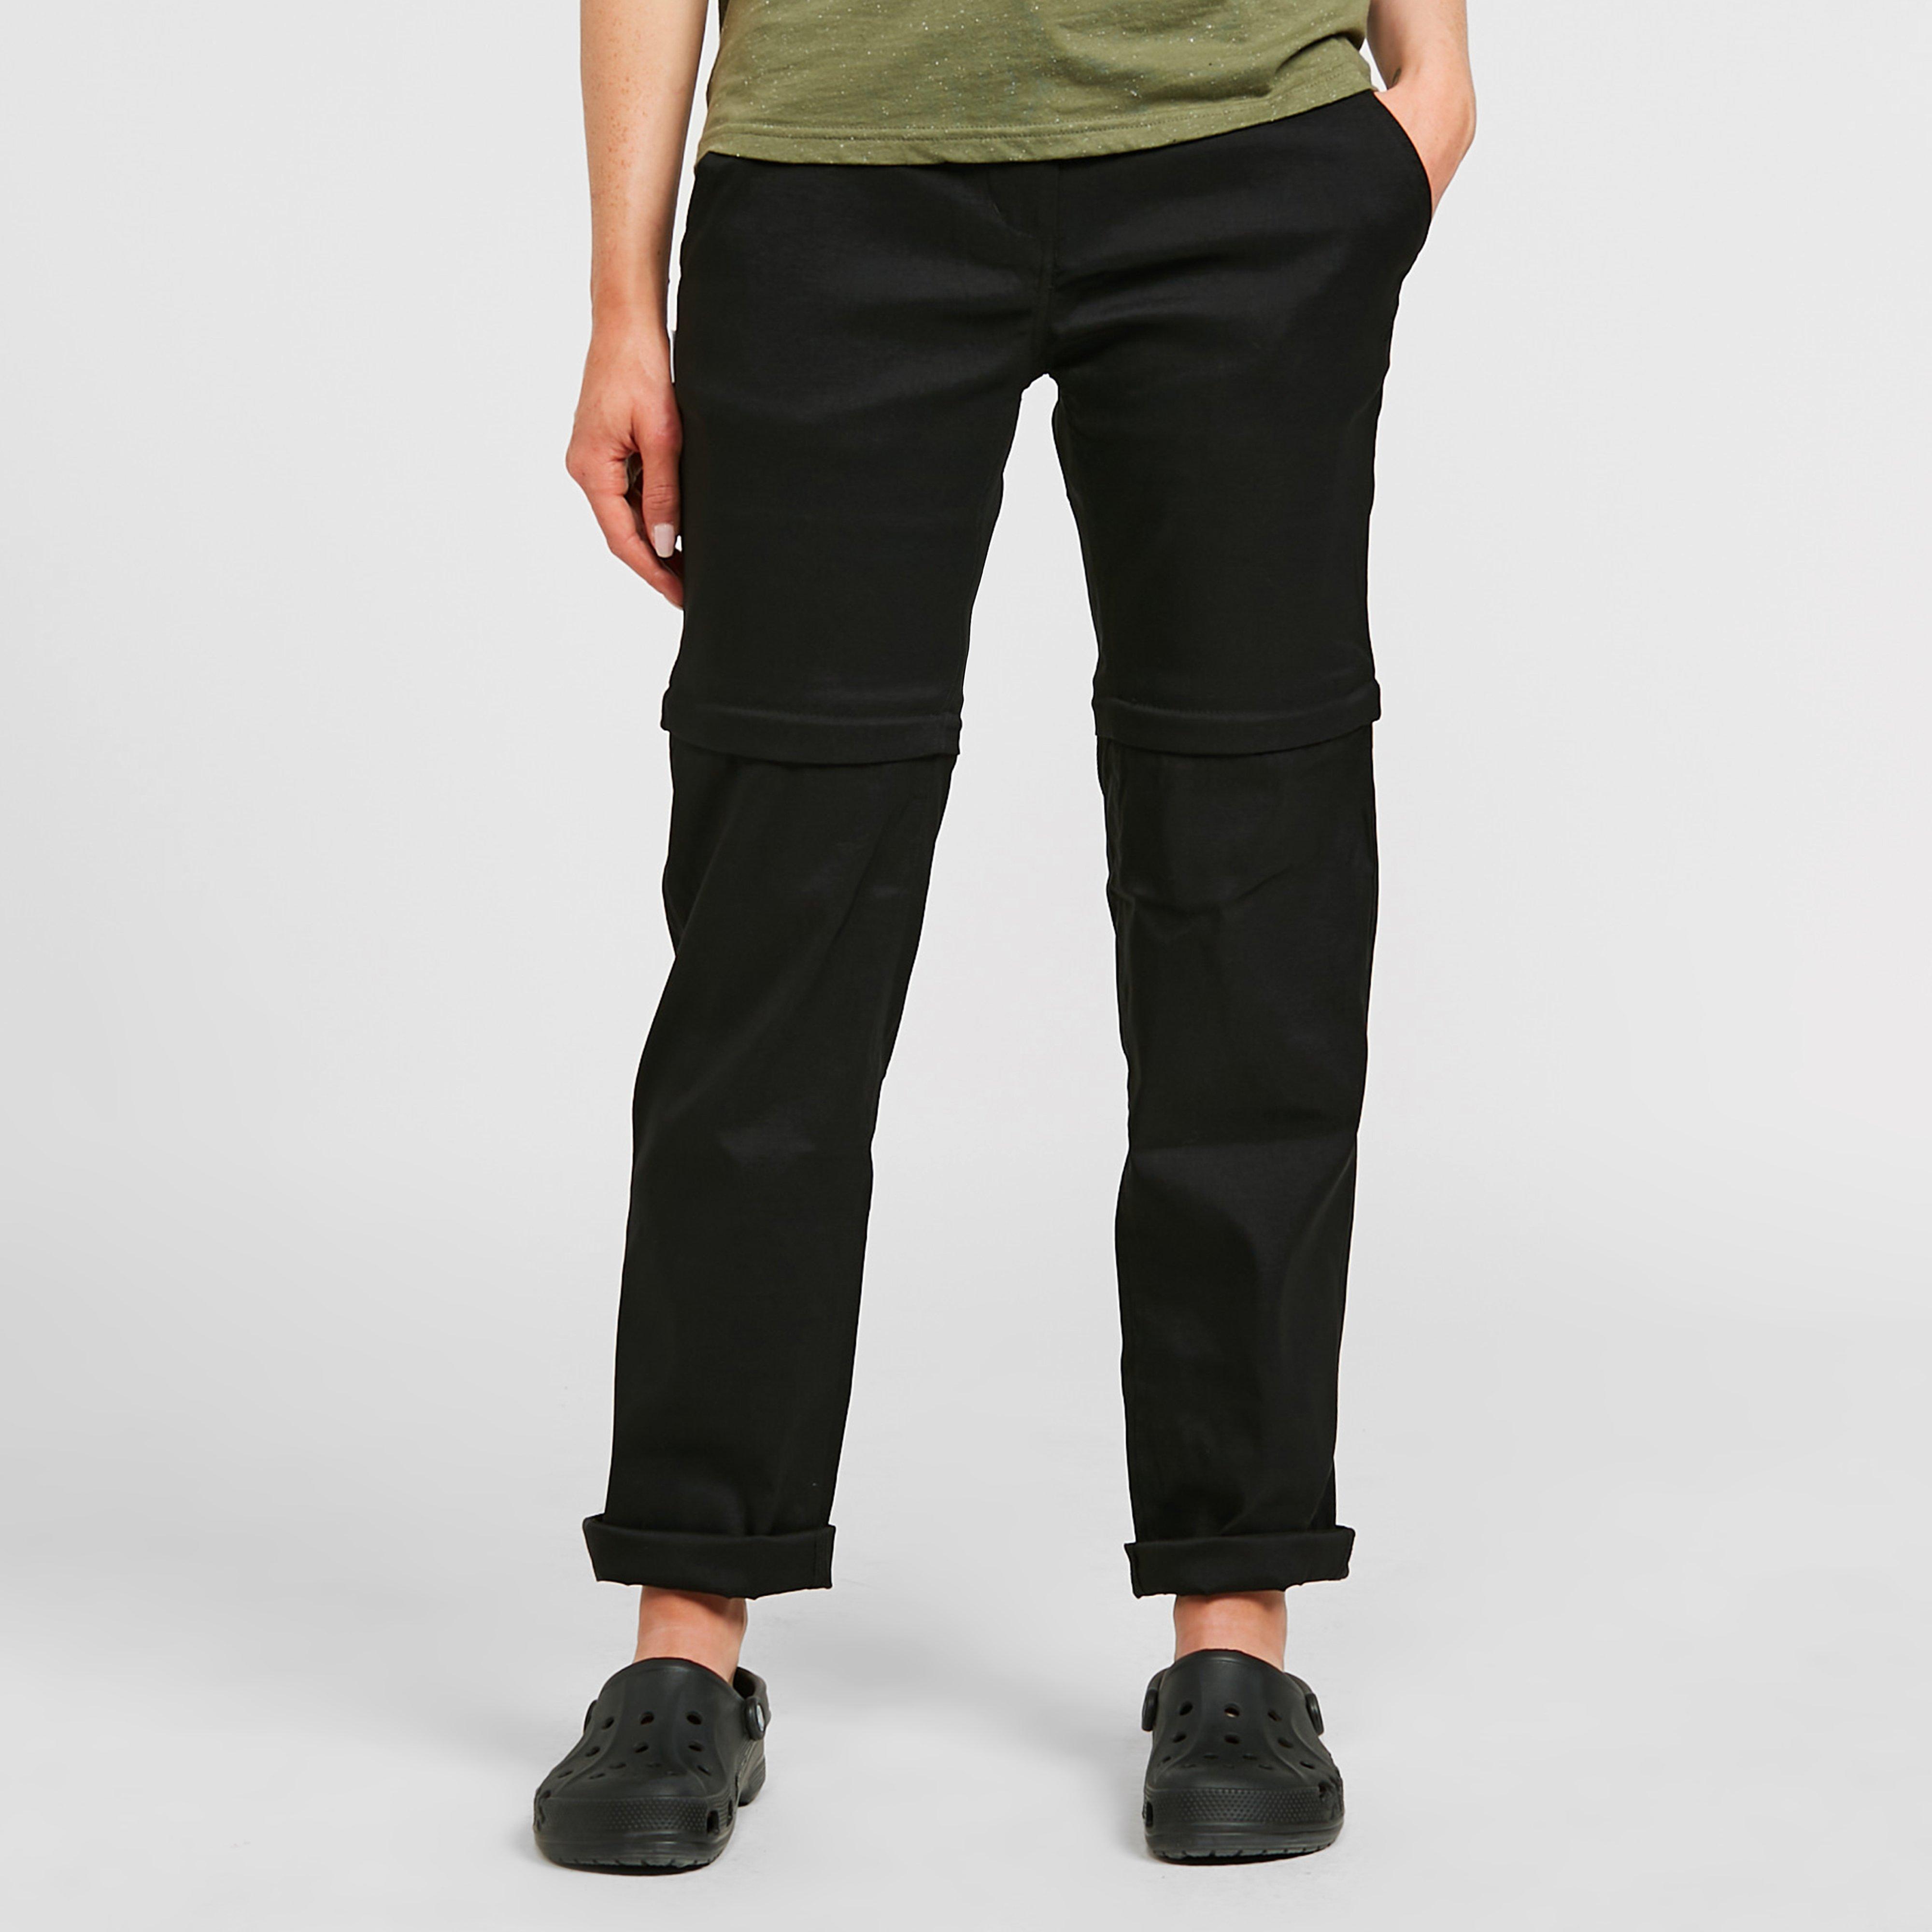 craghoppers women's kiwi pro convertible trousers (regular), black